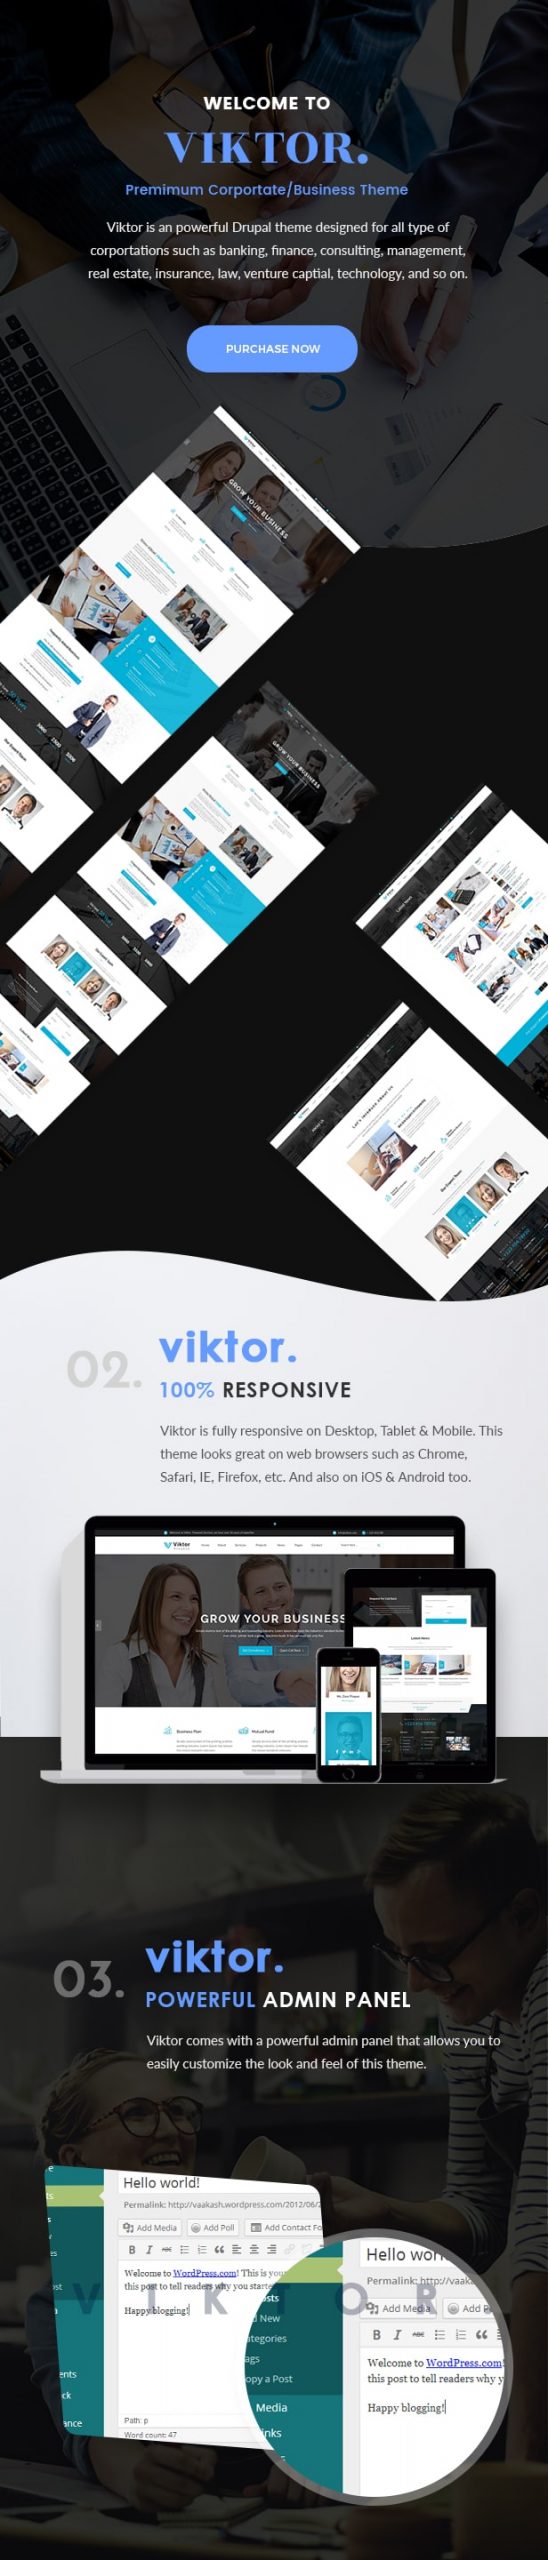 Viktor - Responsive Corporate Drupal Template - 1